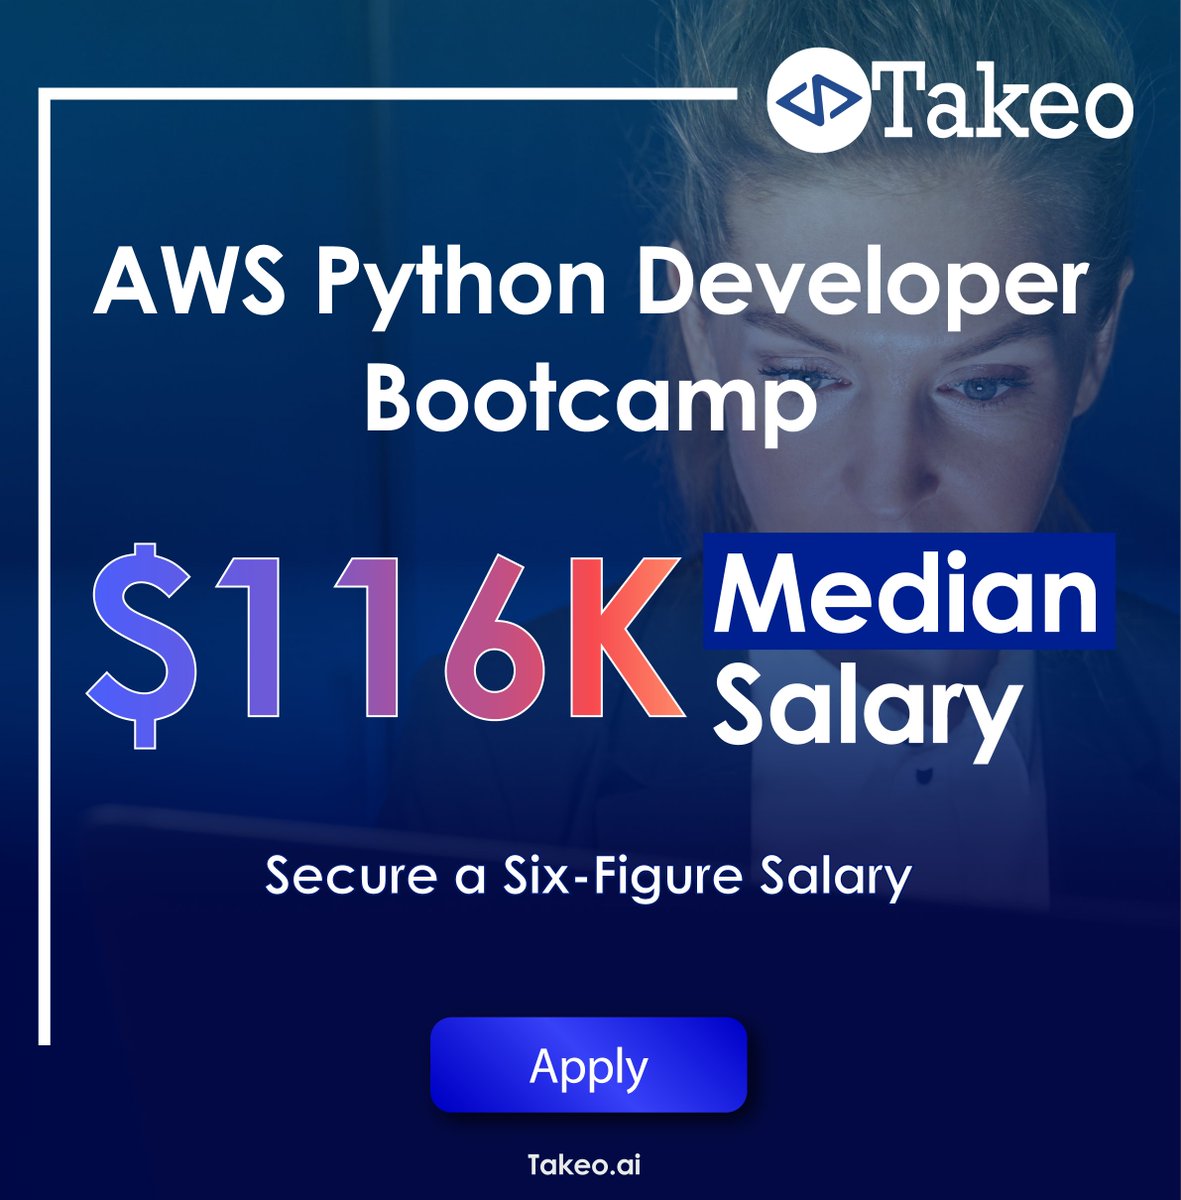 𝐒𝐞𝐜𝐮𝐫𝐞 𝐚 𝐒𝐢𝐱-𝐅𝐢𝐠𝐮𝐫𝐞 𝐒𝐚𝐥𝐚𝐫𝐲: 𝐌𝐚𝐬𝐭𝐞𝐫 𝐀𝐖𝐒 𝐚𝐧𝐝 𝐏𝐲𝐭𝐡𝐨𝐧 𝐰𝐢𝐭𝐡 𝐓𝐚𝐤𝐞𝐨'𝐬 𝐂𝐚𝐫𝐞𝐞𝐫-𝐃𝐫𝐢𝐯𝐞𝐧 𝐁𝐨𝐨𝐭𝐜𝐚𝐦𝐩!

To Apply: takeo.ai/aws-python-boo… 

#AWS #Python #Bootcamp #CareerInTech #CloudComputing #CodeYourFuture  #TechJobs